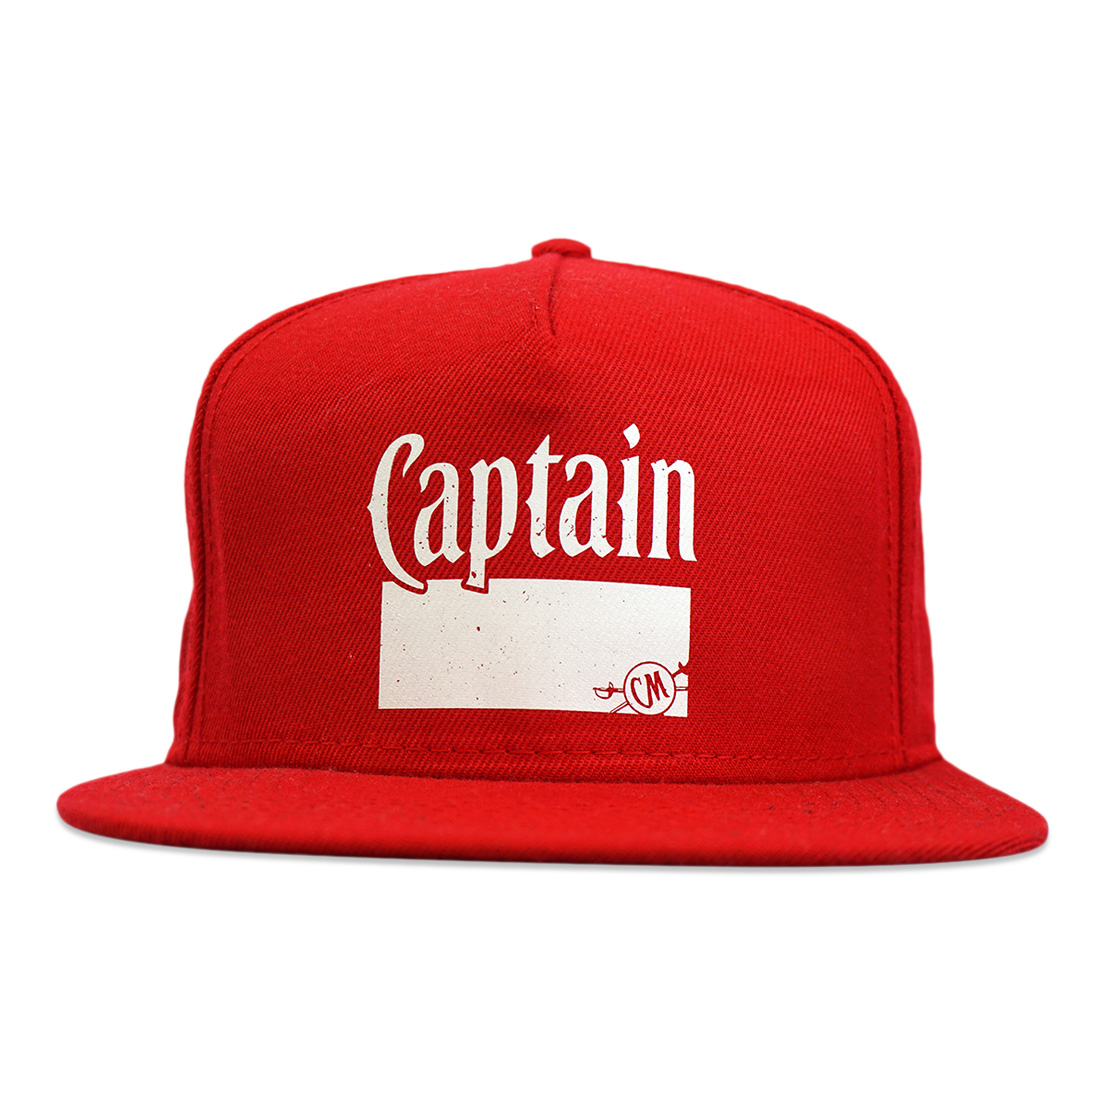 Red Flatbill Cap